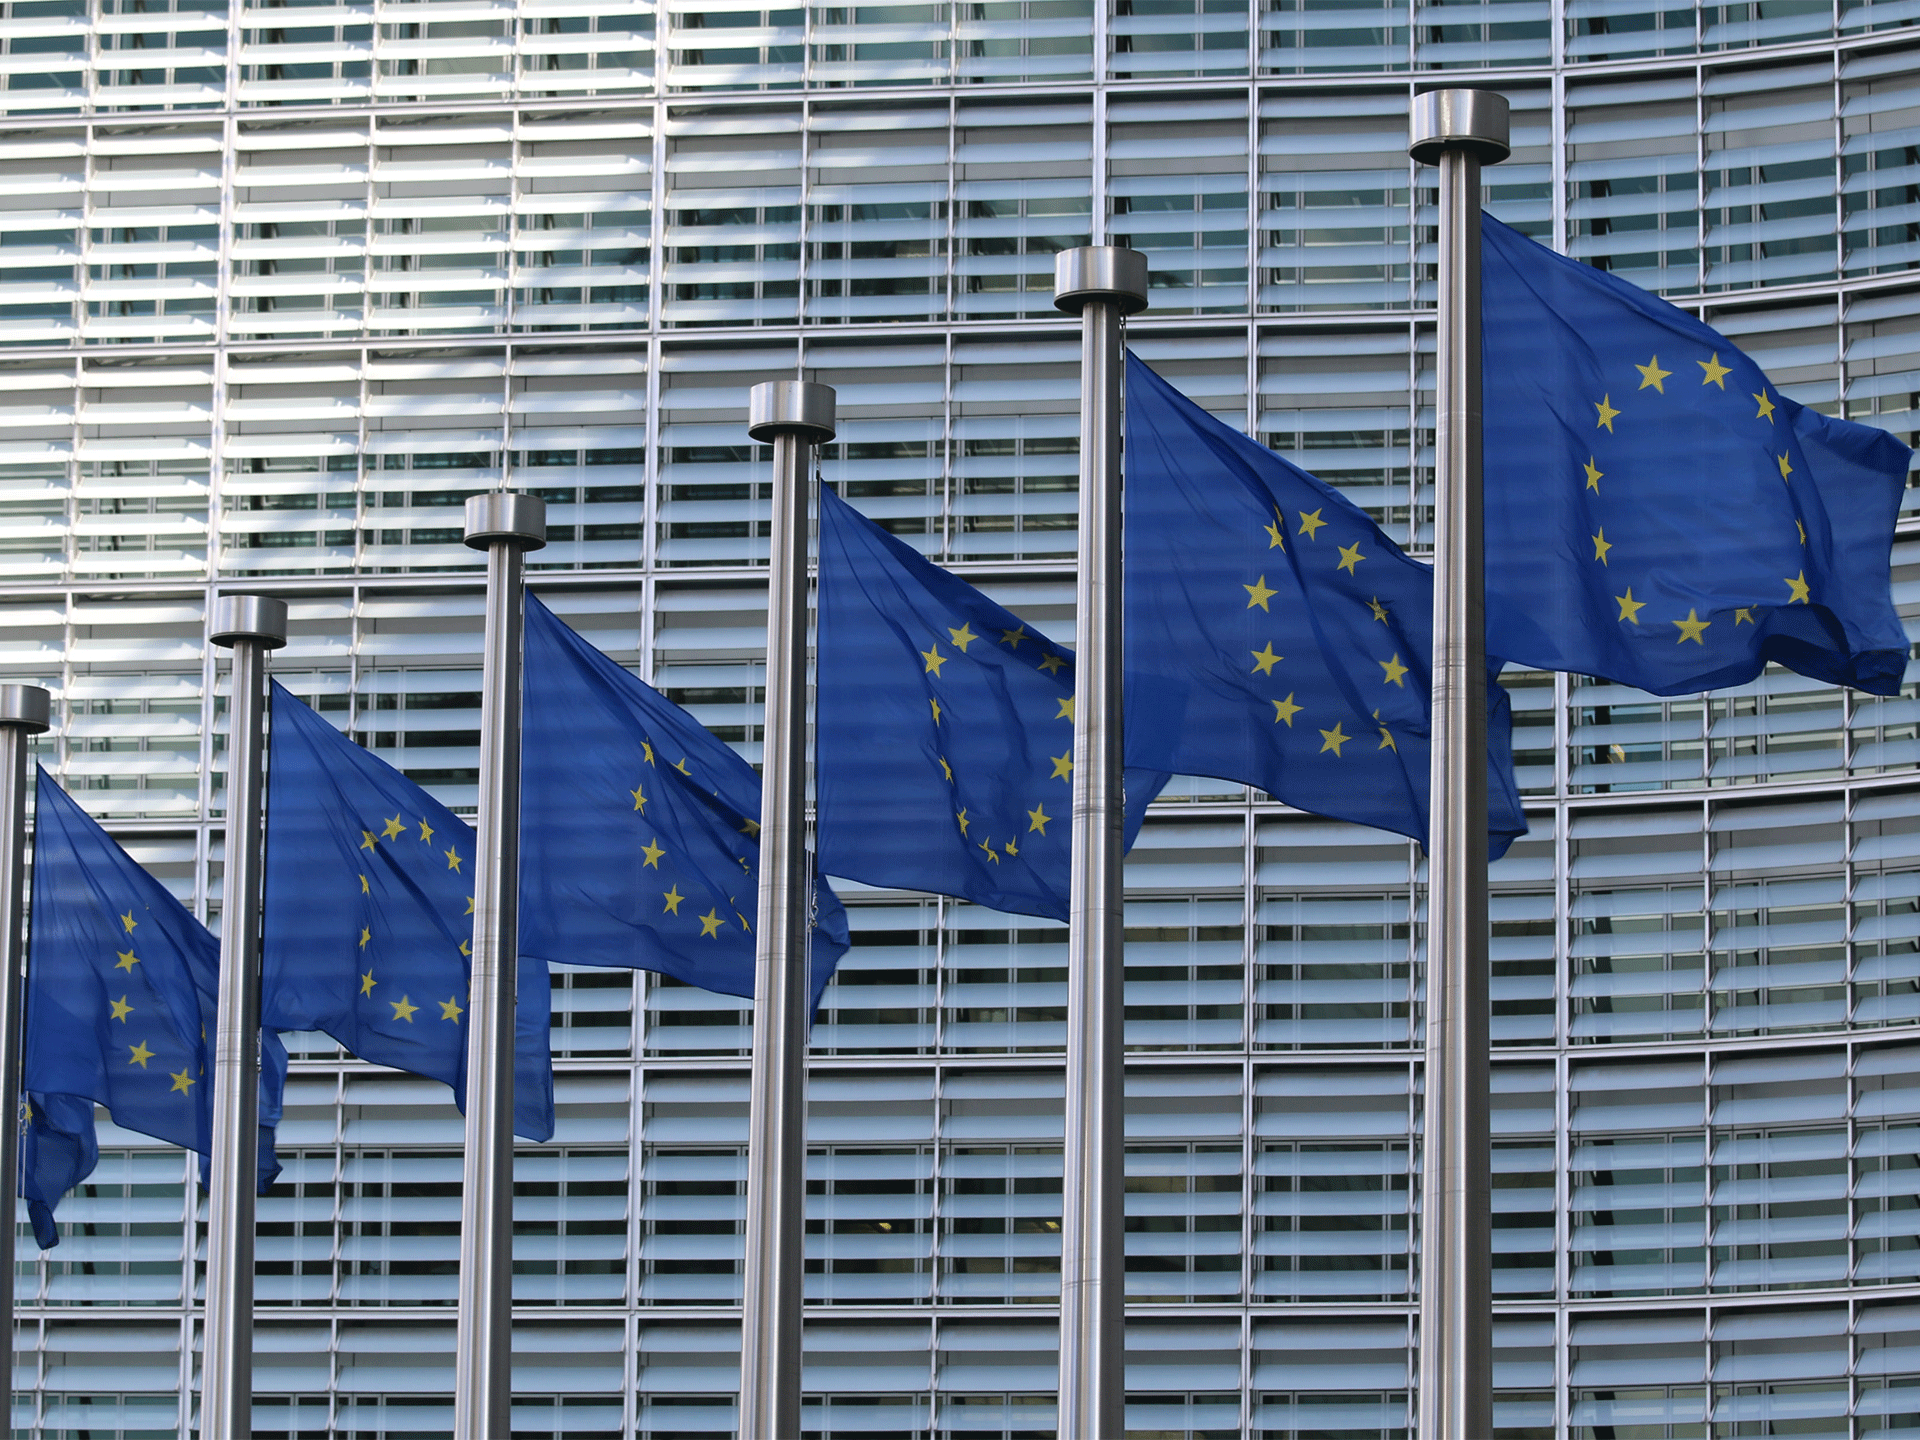 A row of European Union flags